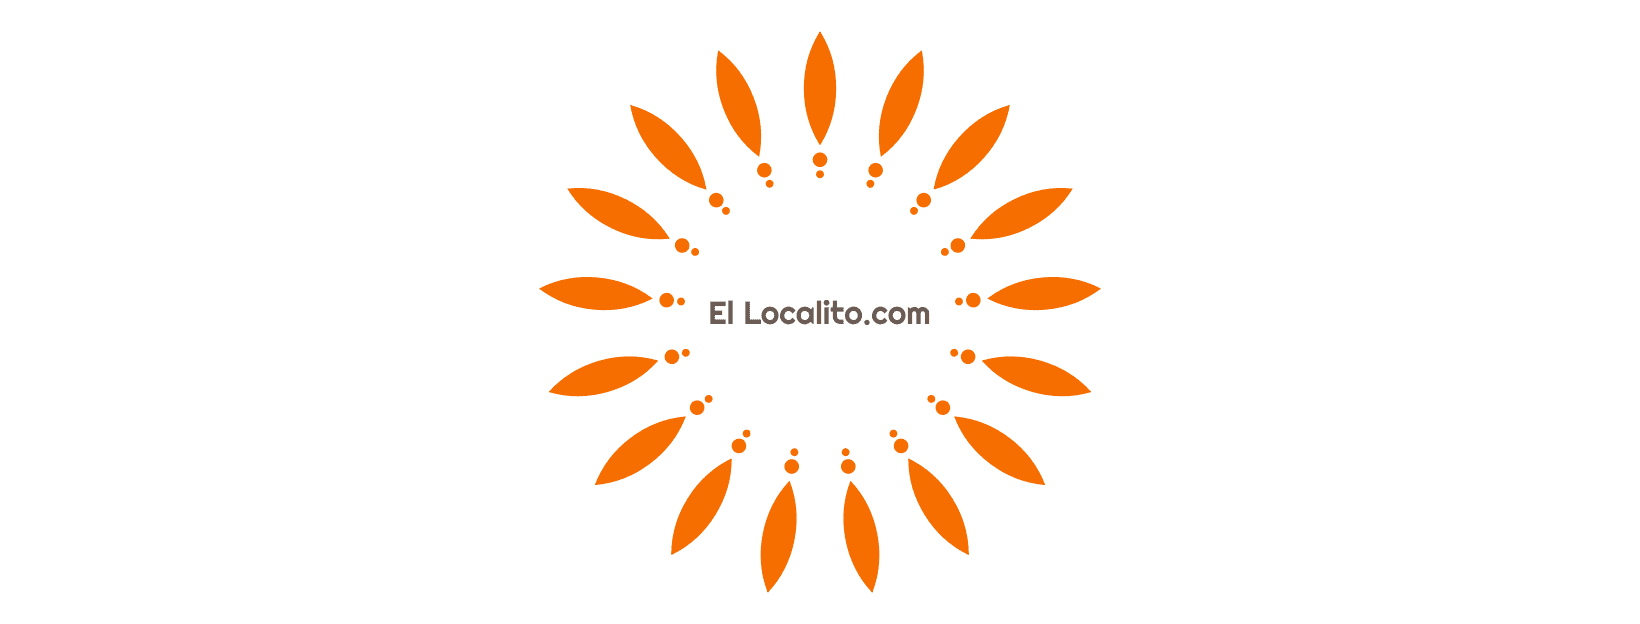 ElLocalito.com – El Localito.com